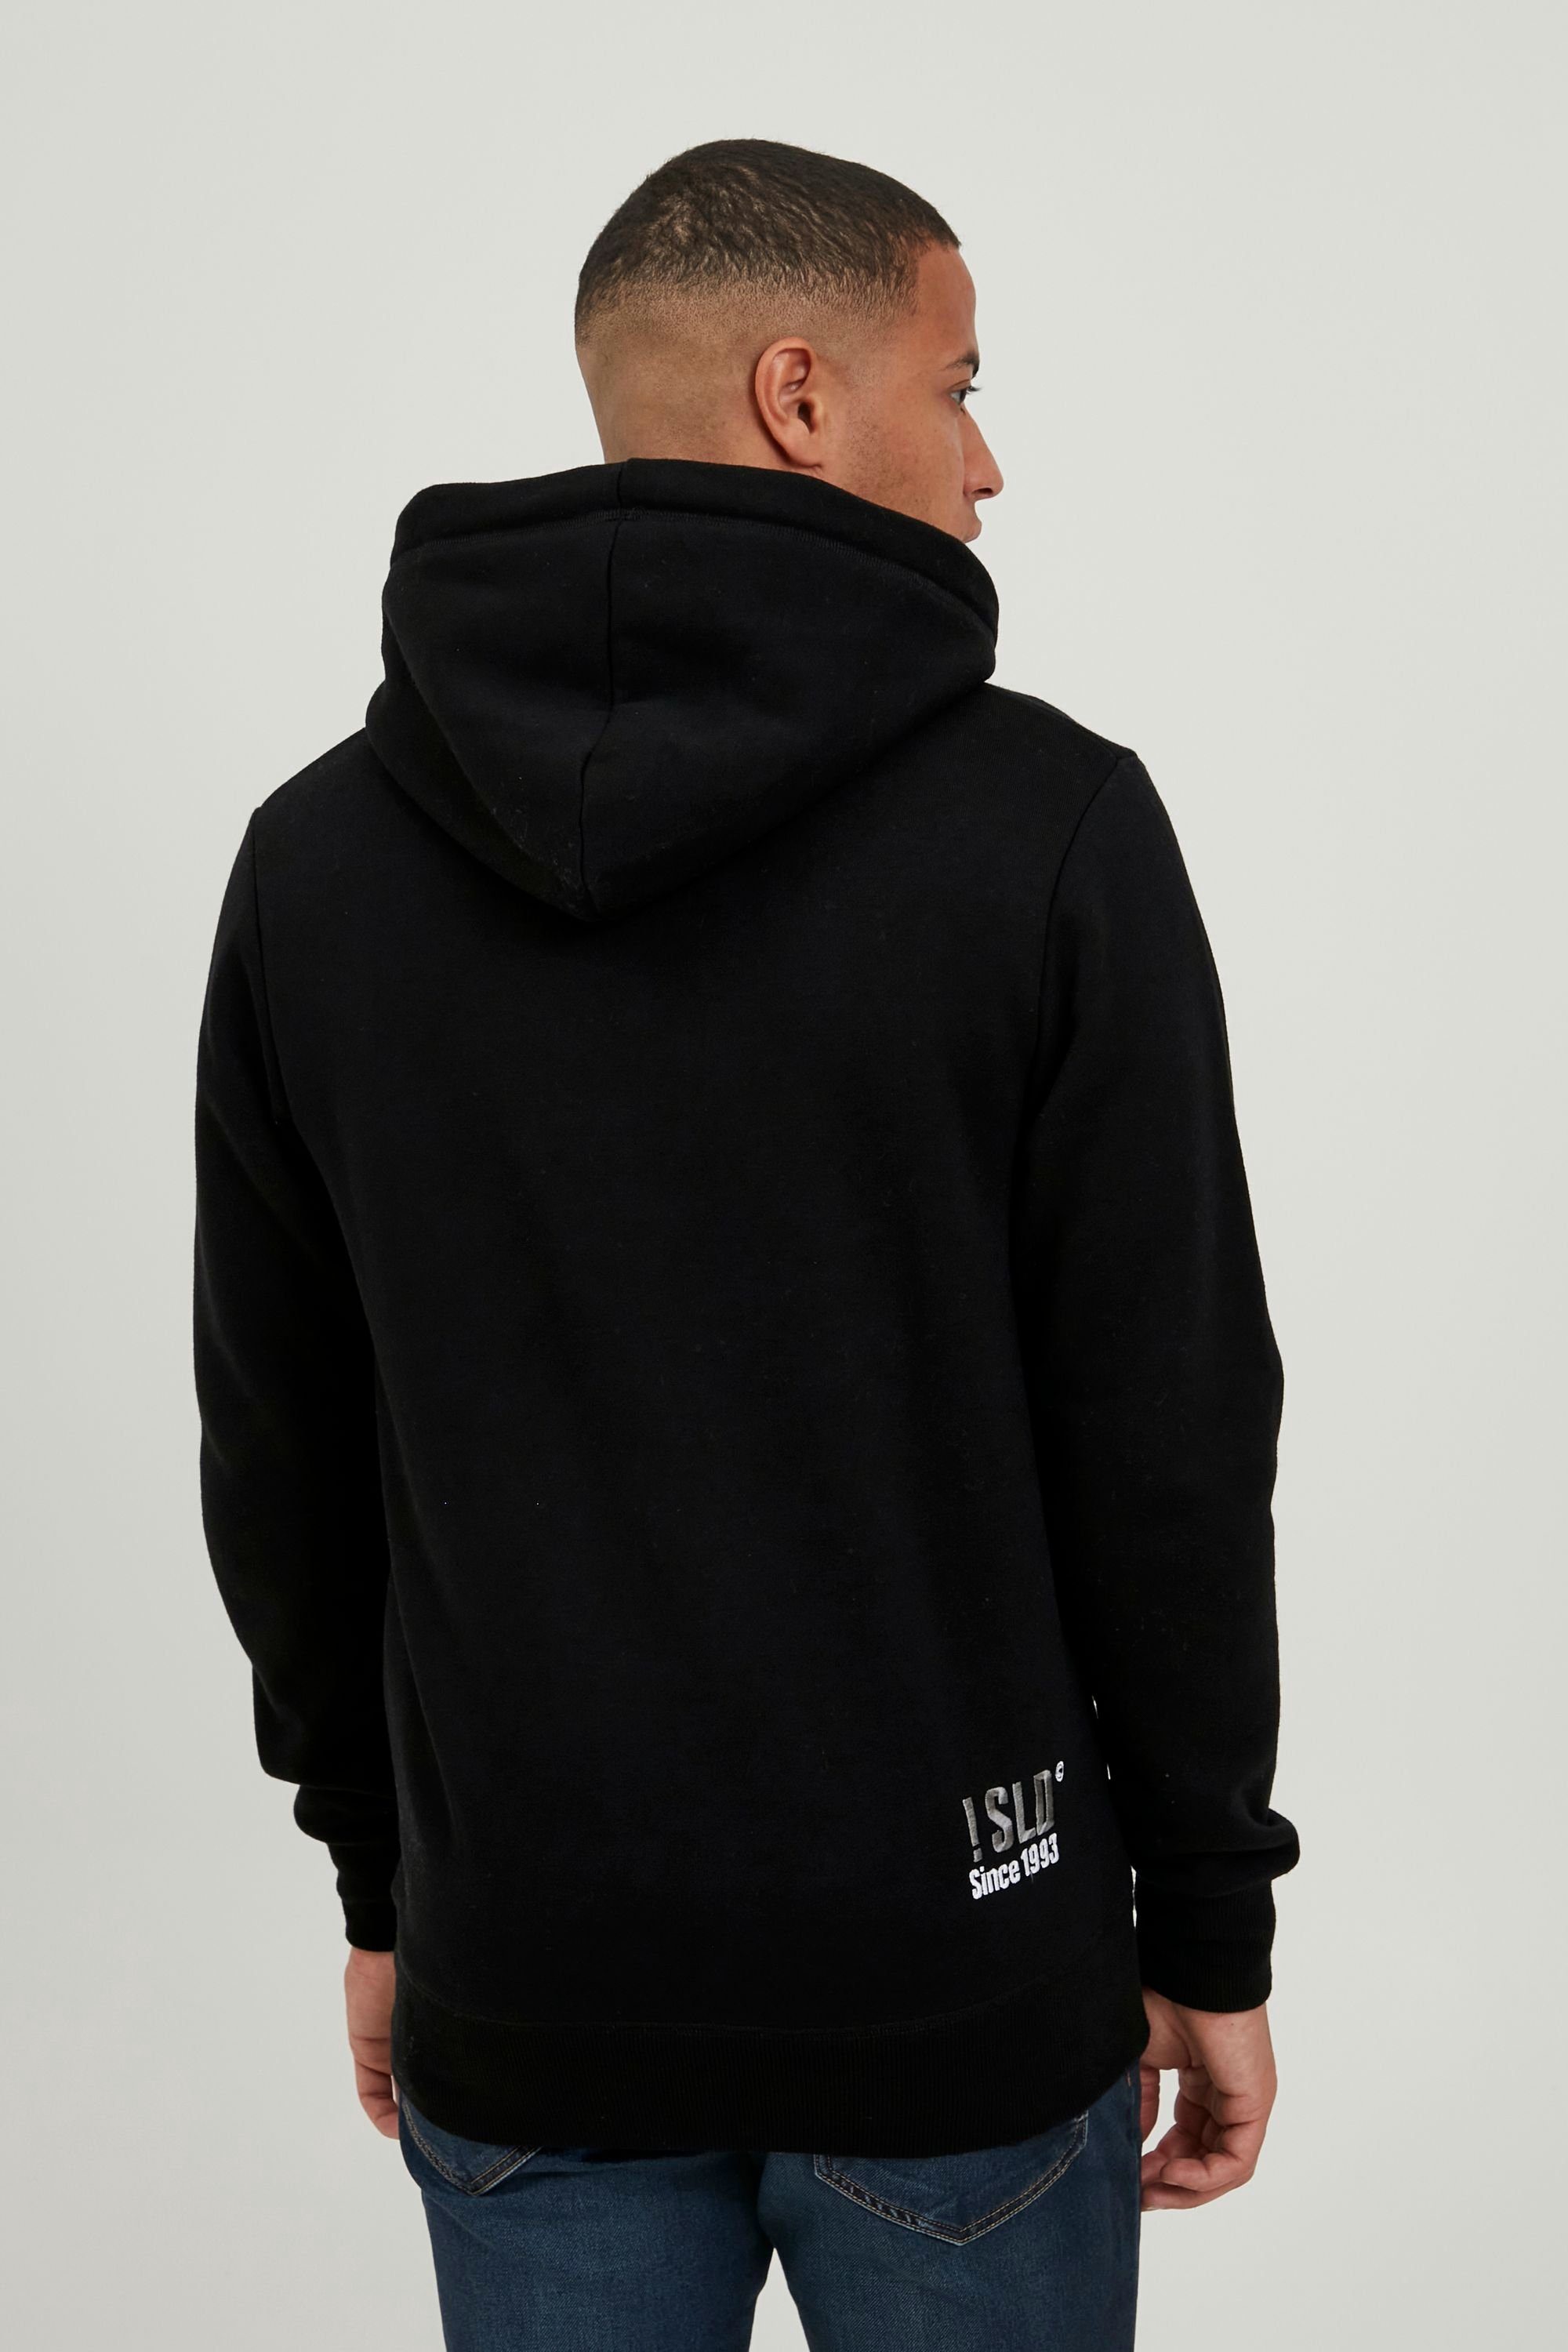 Solid Hoodie SDBennHood Black kontrastfarbenenen mit Kapuzensweatshirt (9000) Details